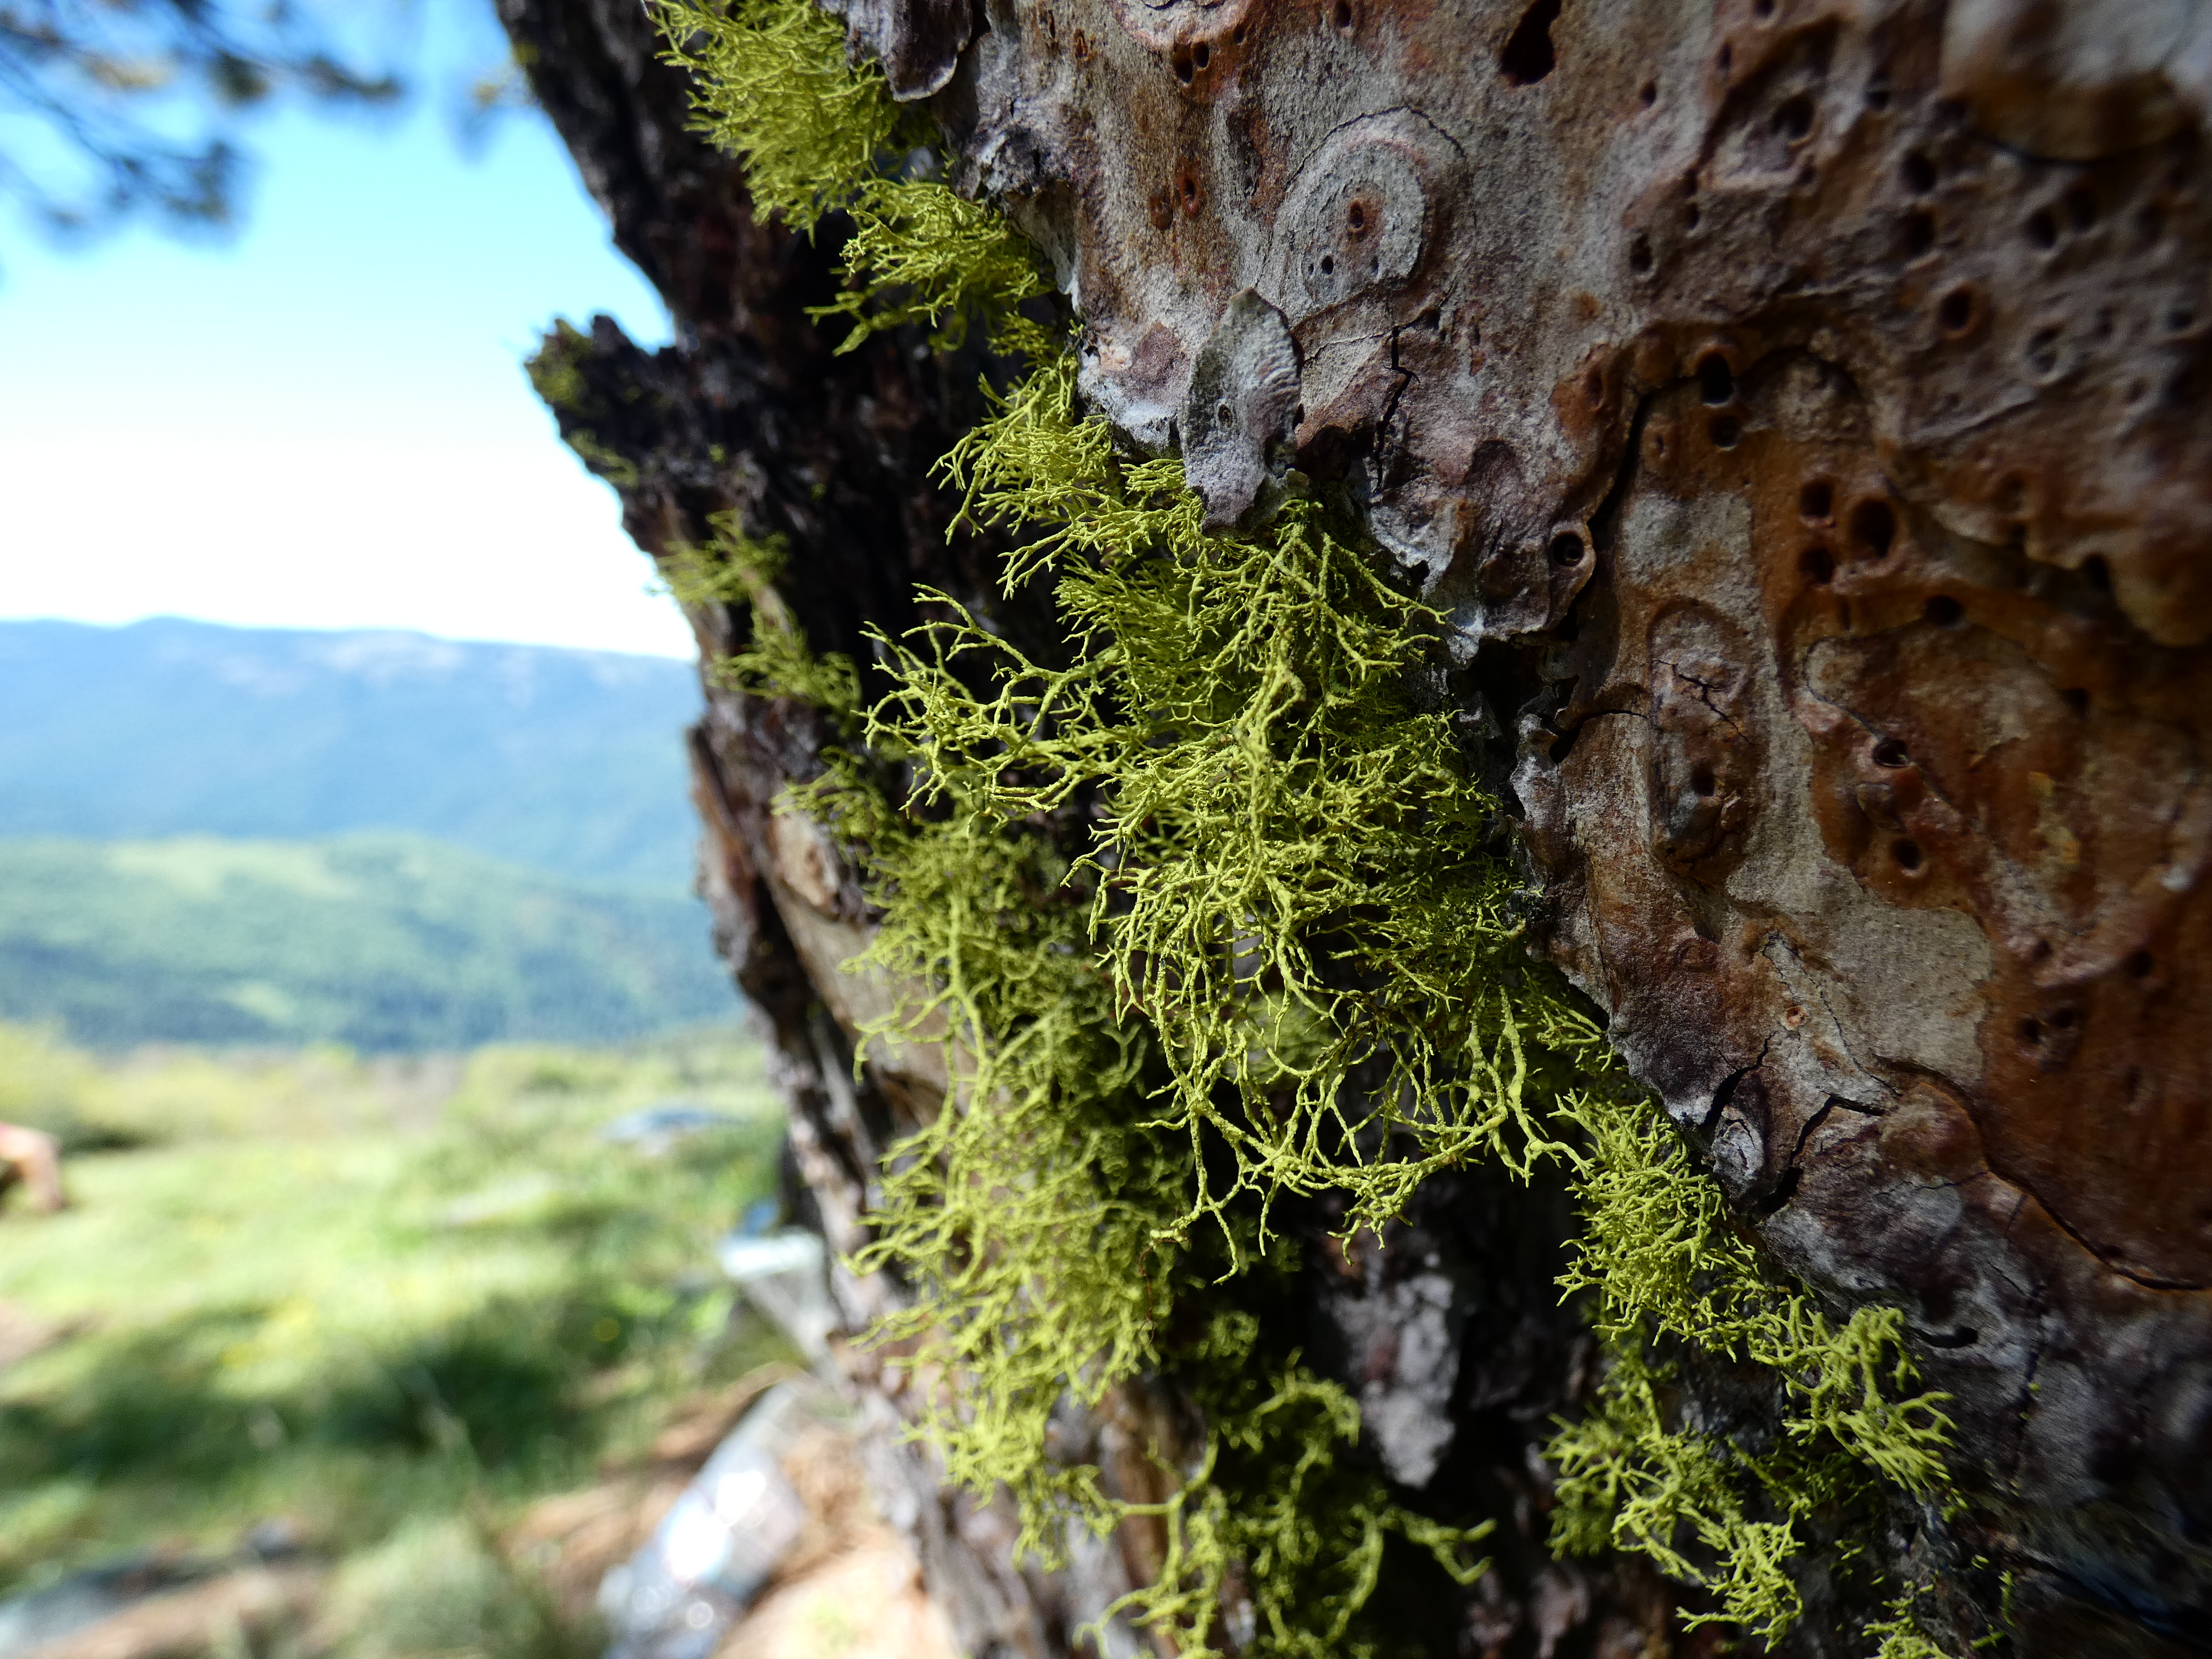 A fruticose lichen growing on tree bark